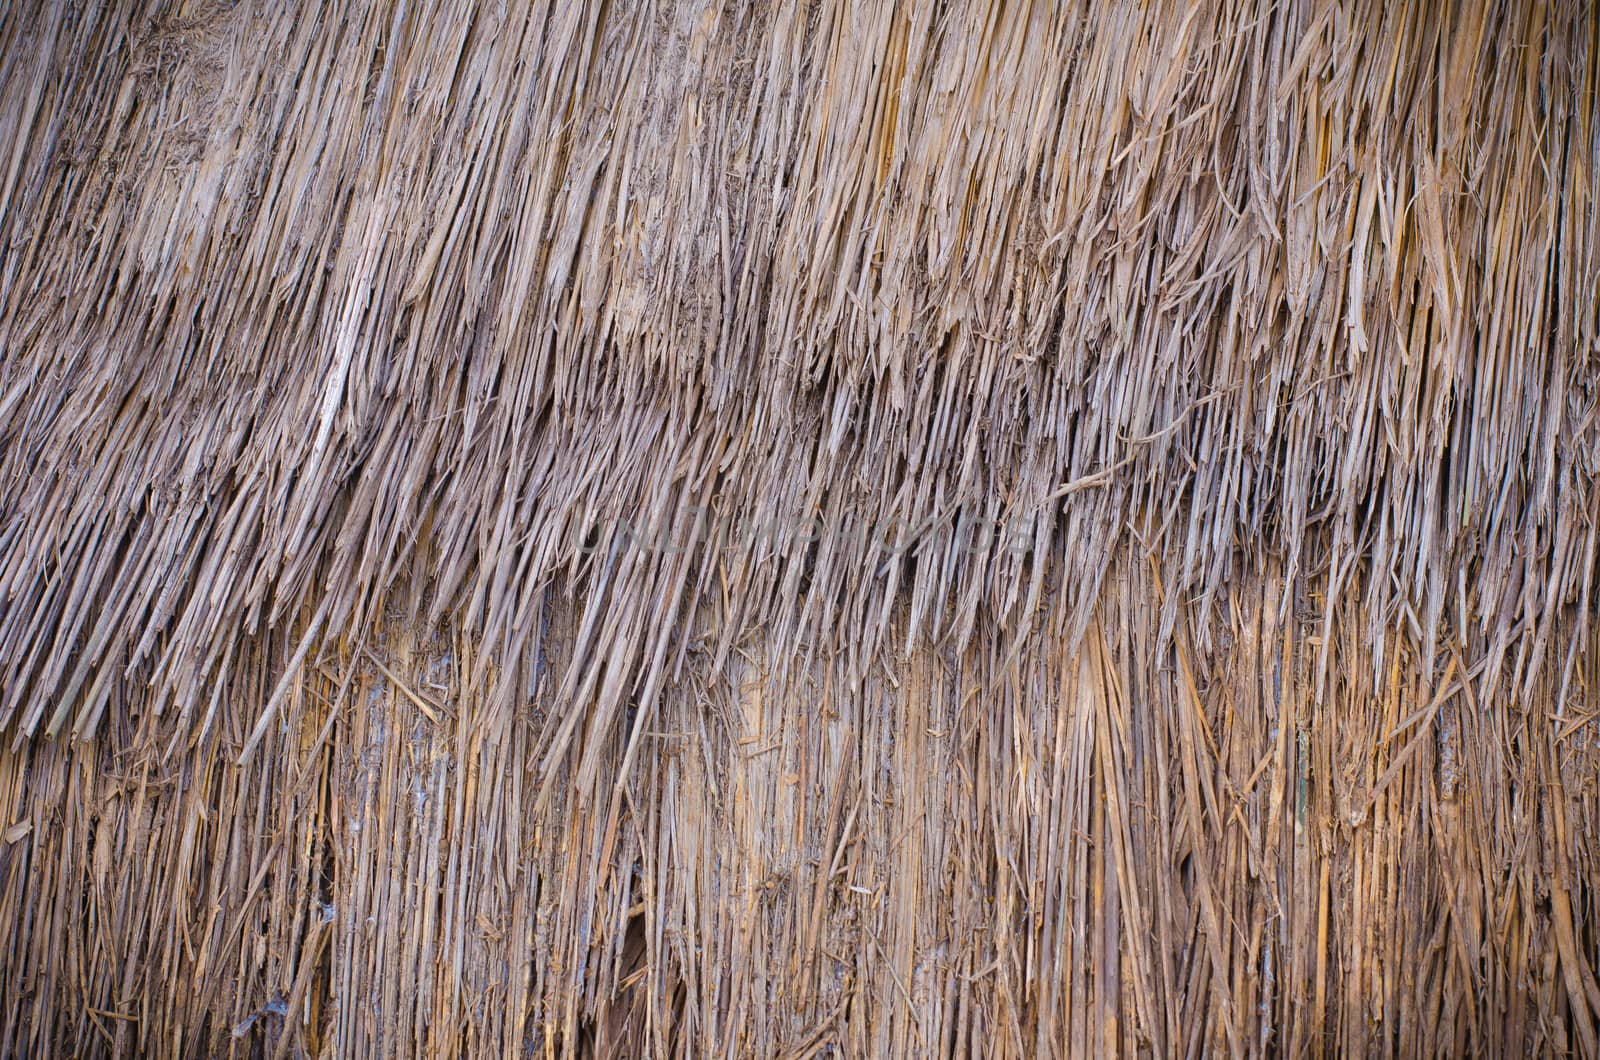 Dry straw pattern, background